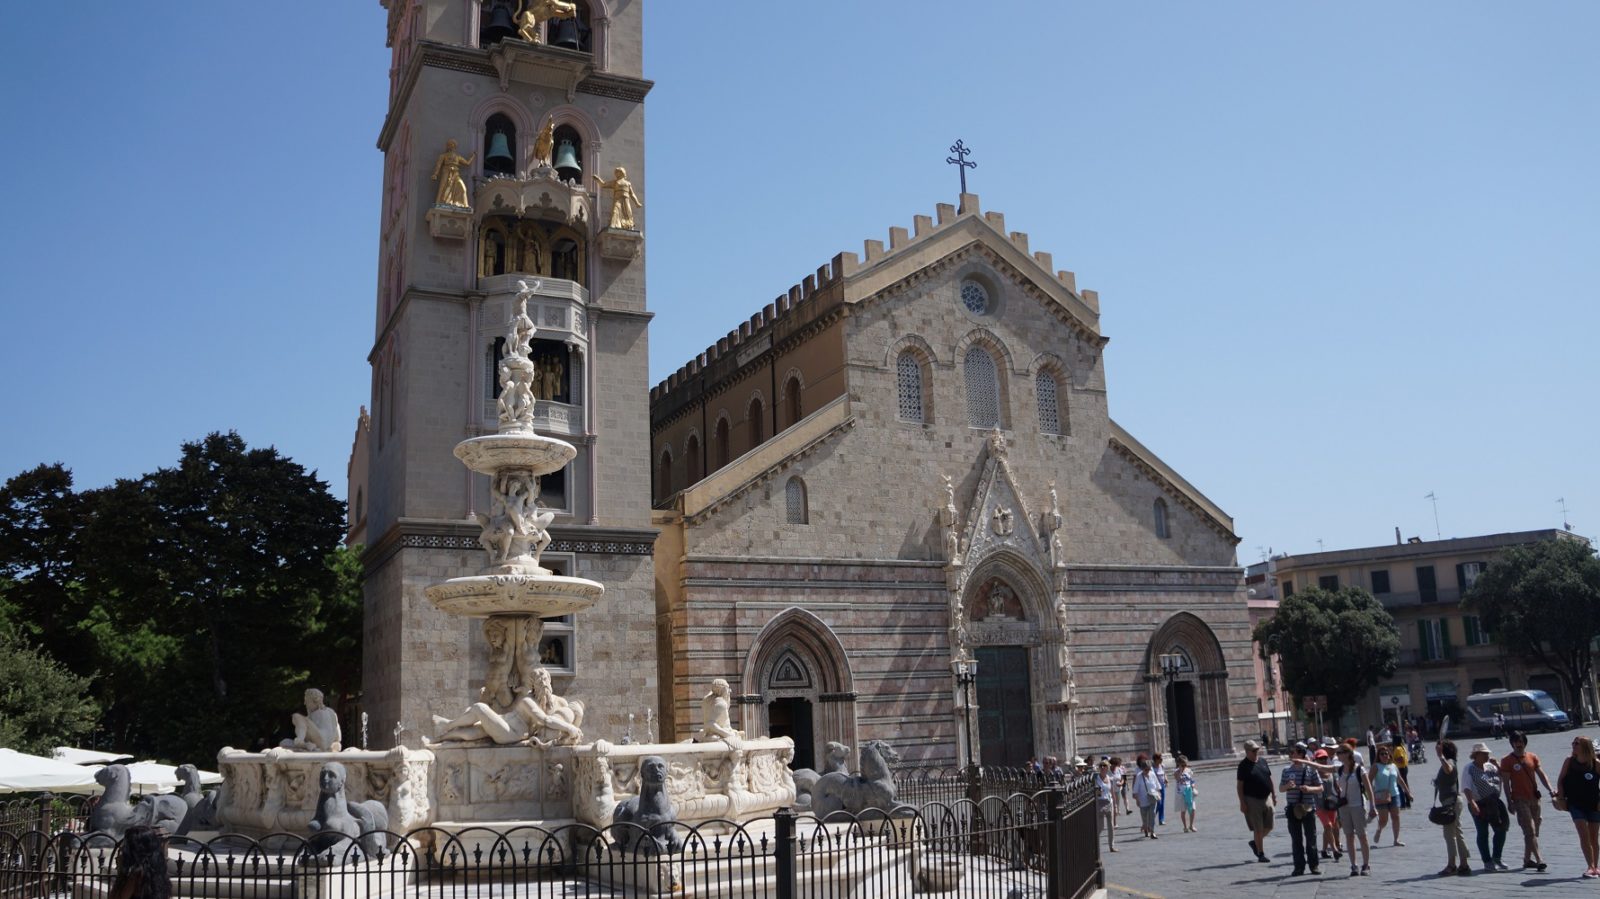 A Catedral de Messina e o "Orologio astronomico"